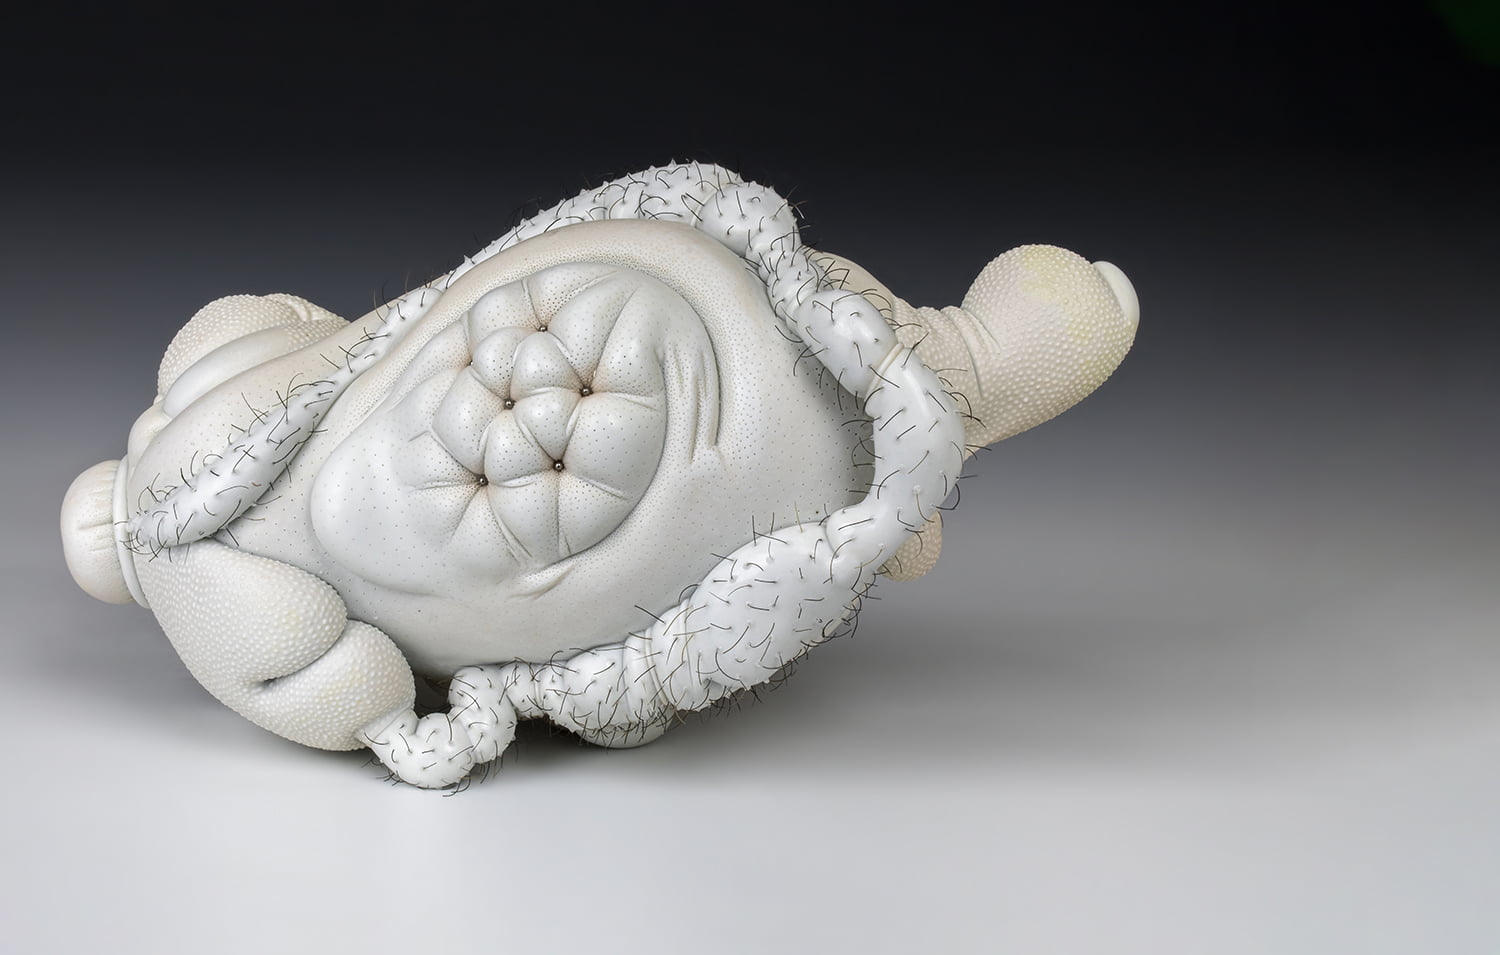 Jason Briggs "Ventura" (alternate view). porcelain and mixed media sculpture ceramics.